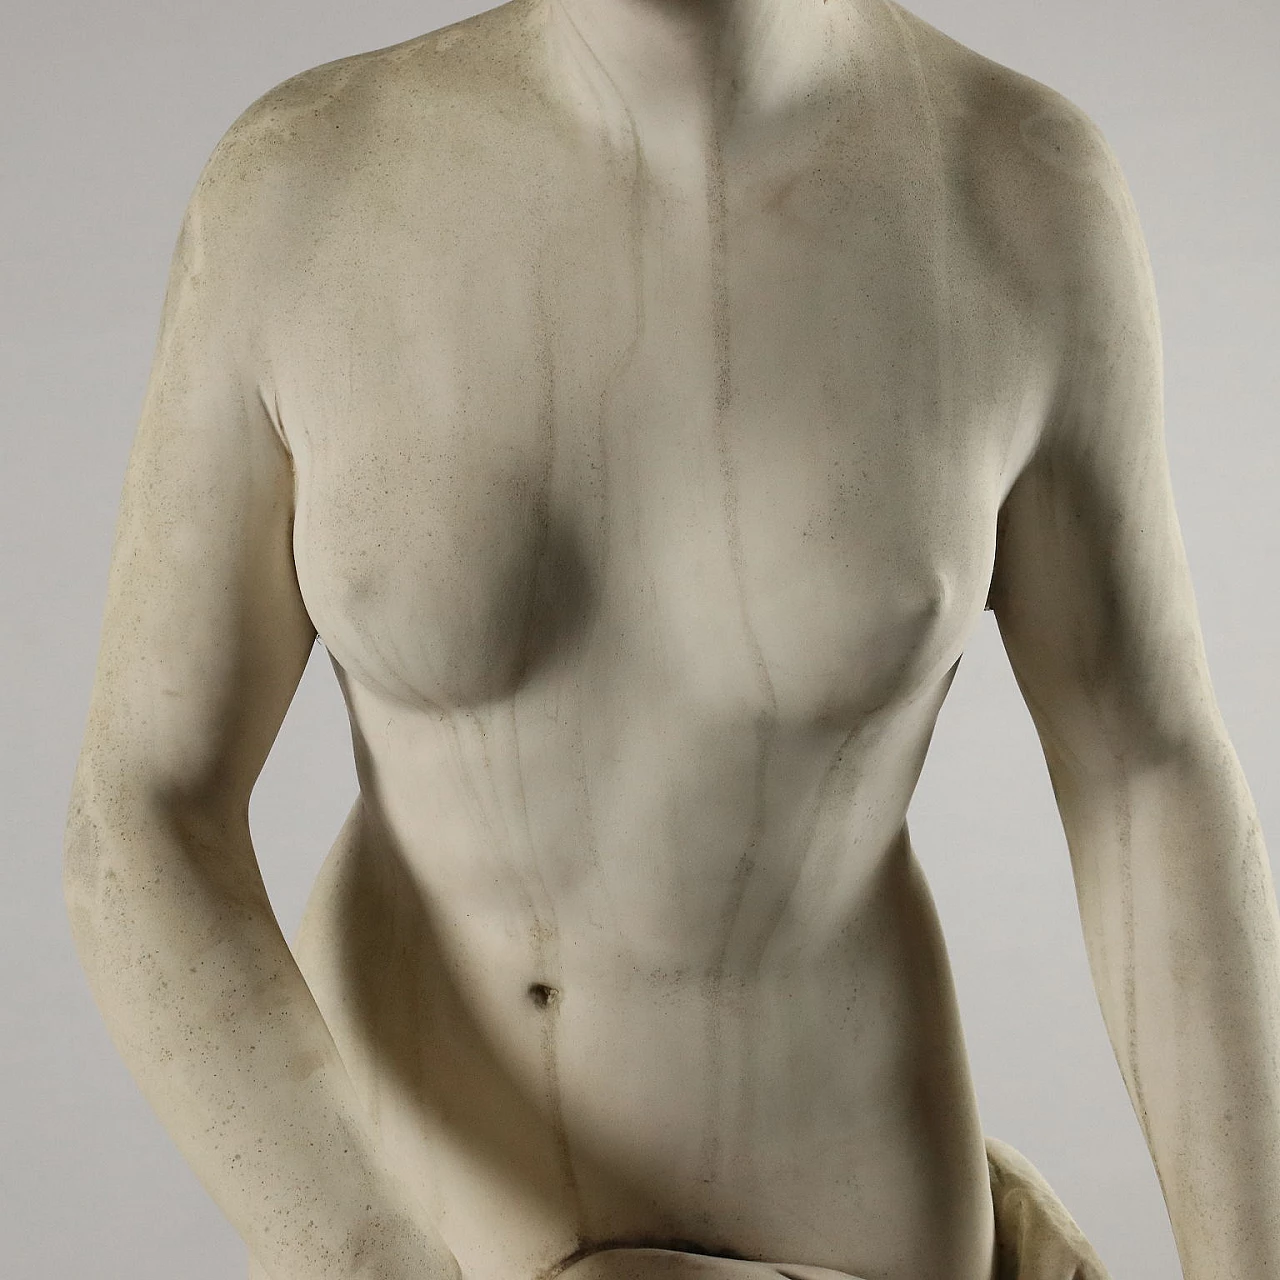 Dal Torrione, La bagnante, scultura in marmo sintetico 6